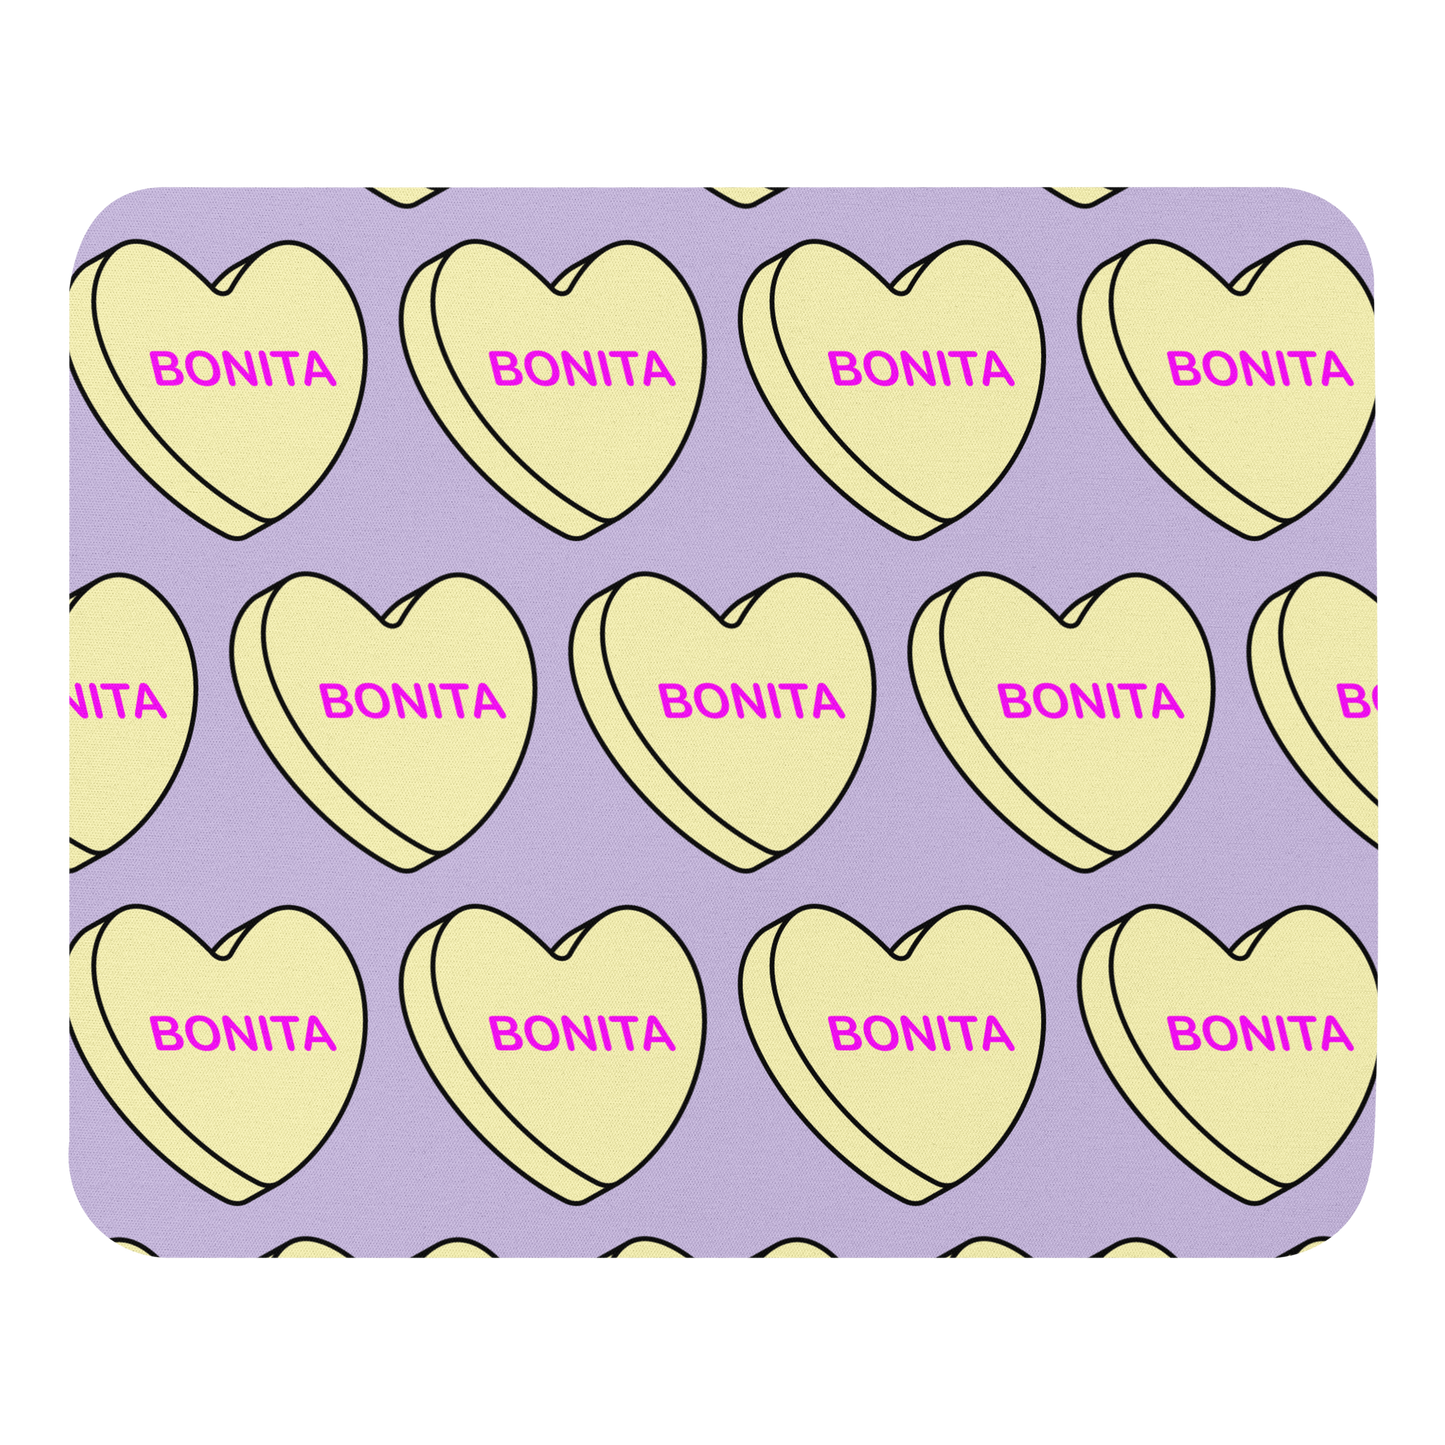 Bonita Candy Conversation Heart - Mouse pad